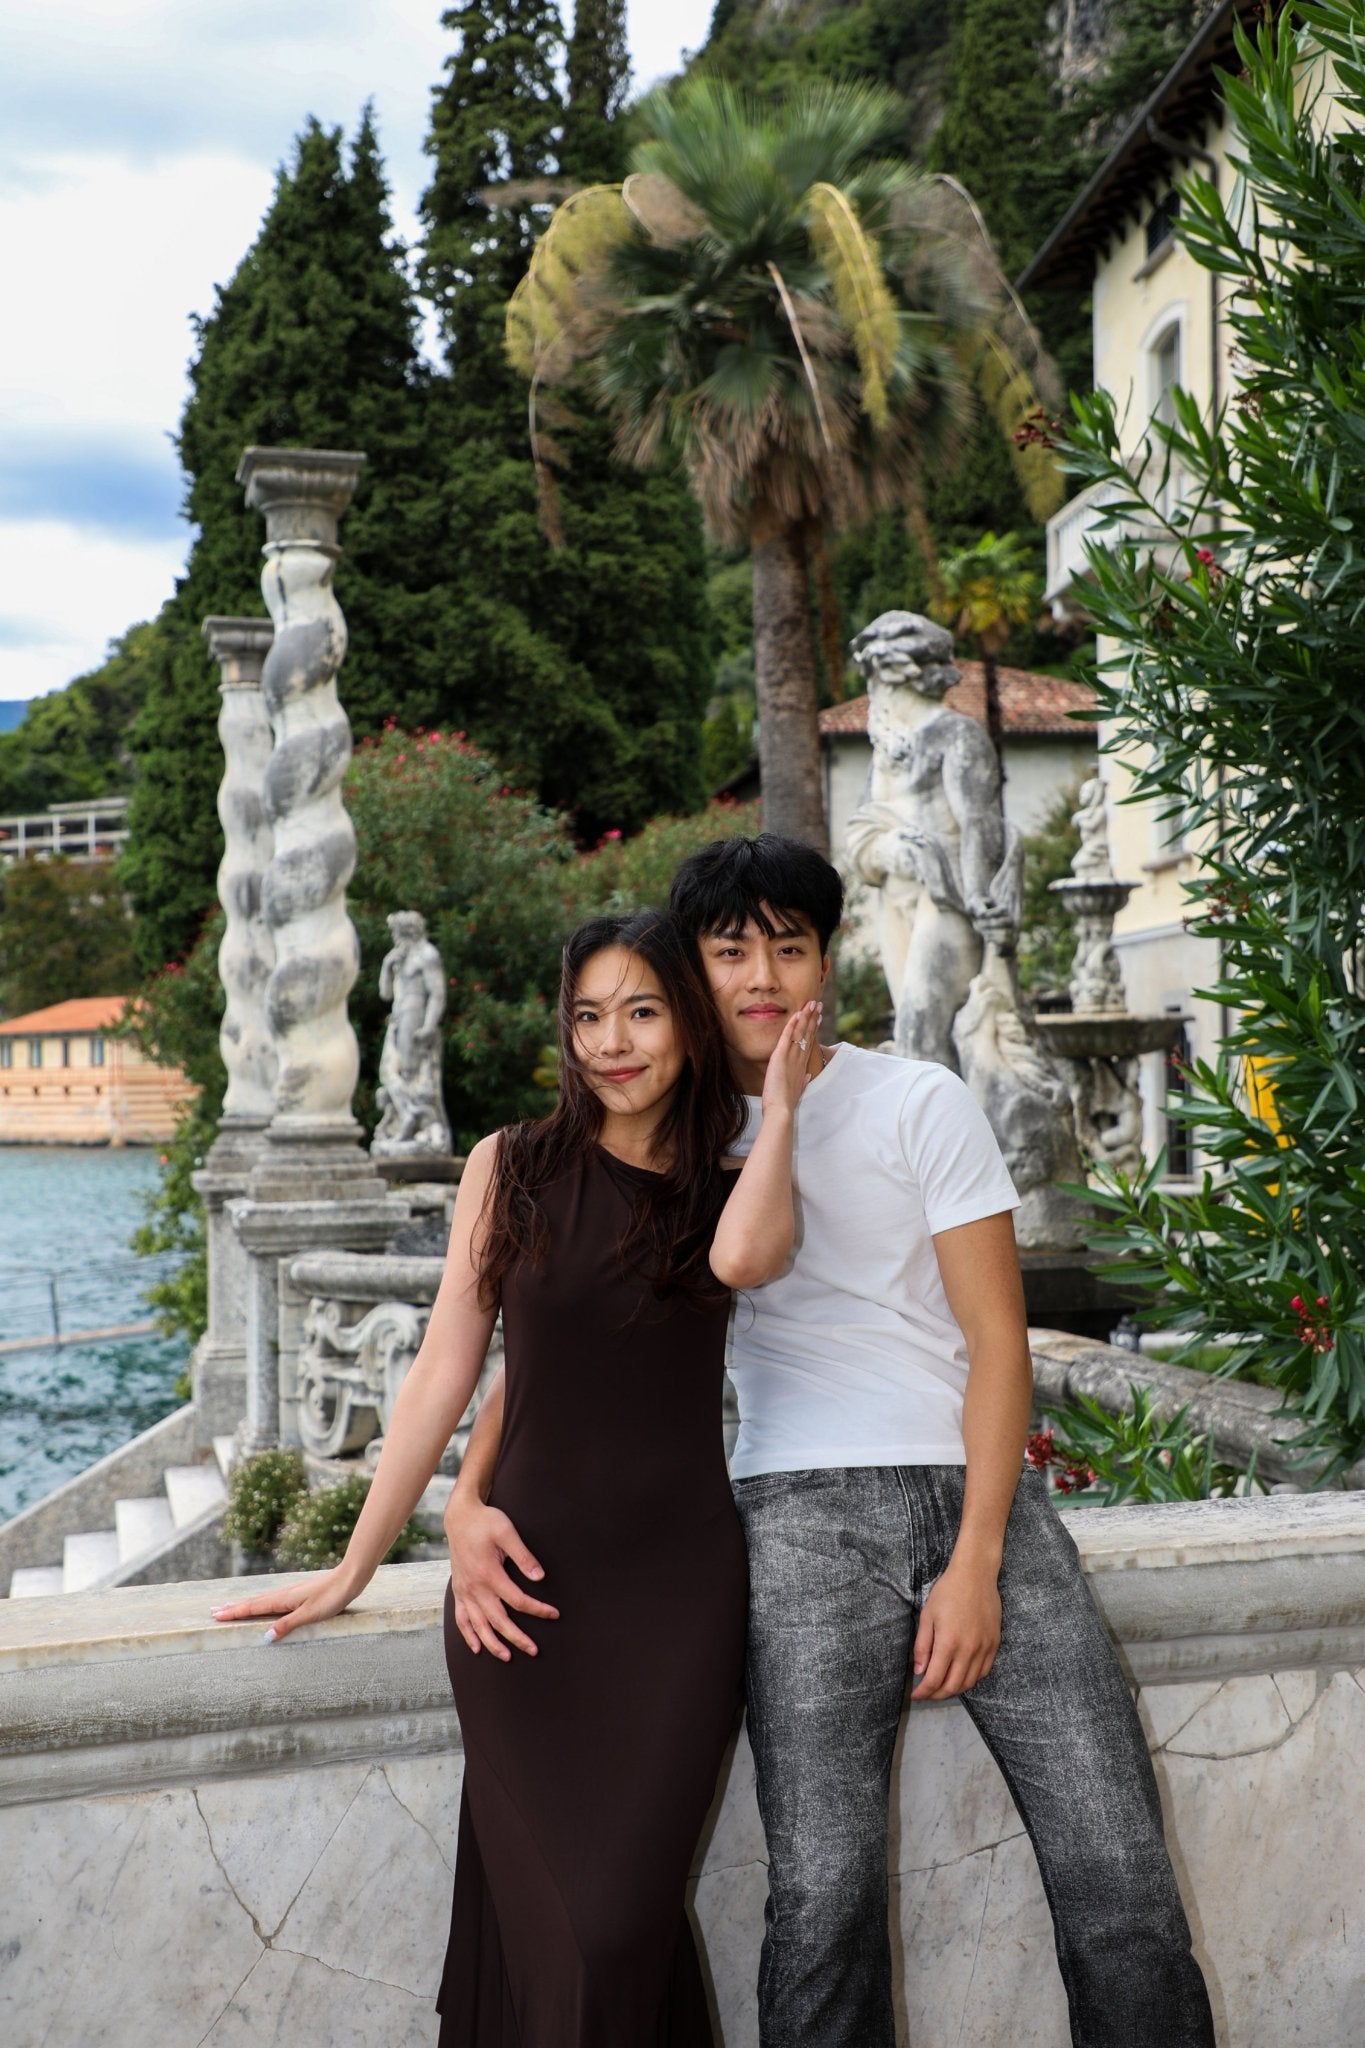 Proposal Photo Shoot at Villa Monastero in Varenna - Lake Como Photographer - FRAQAIR